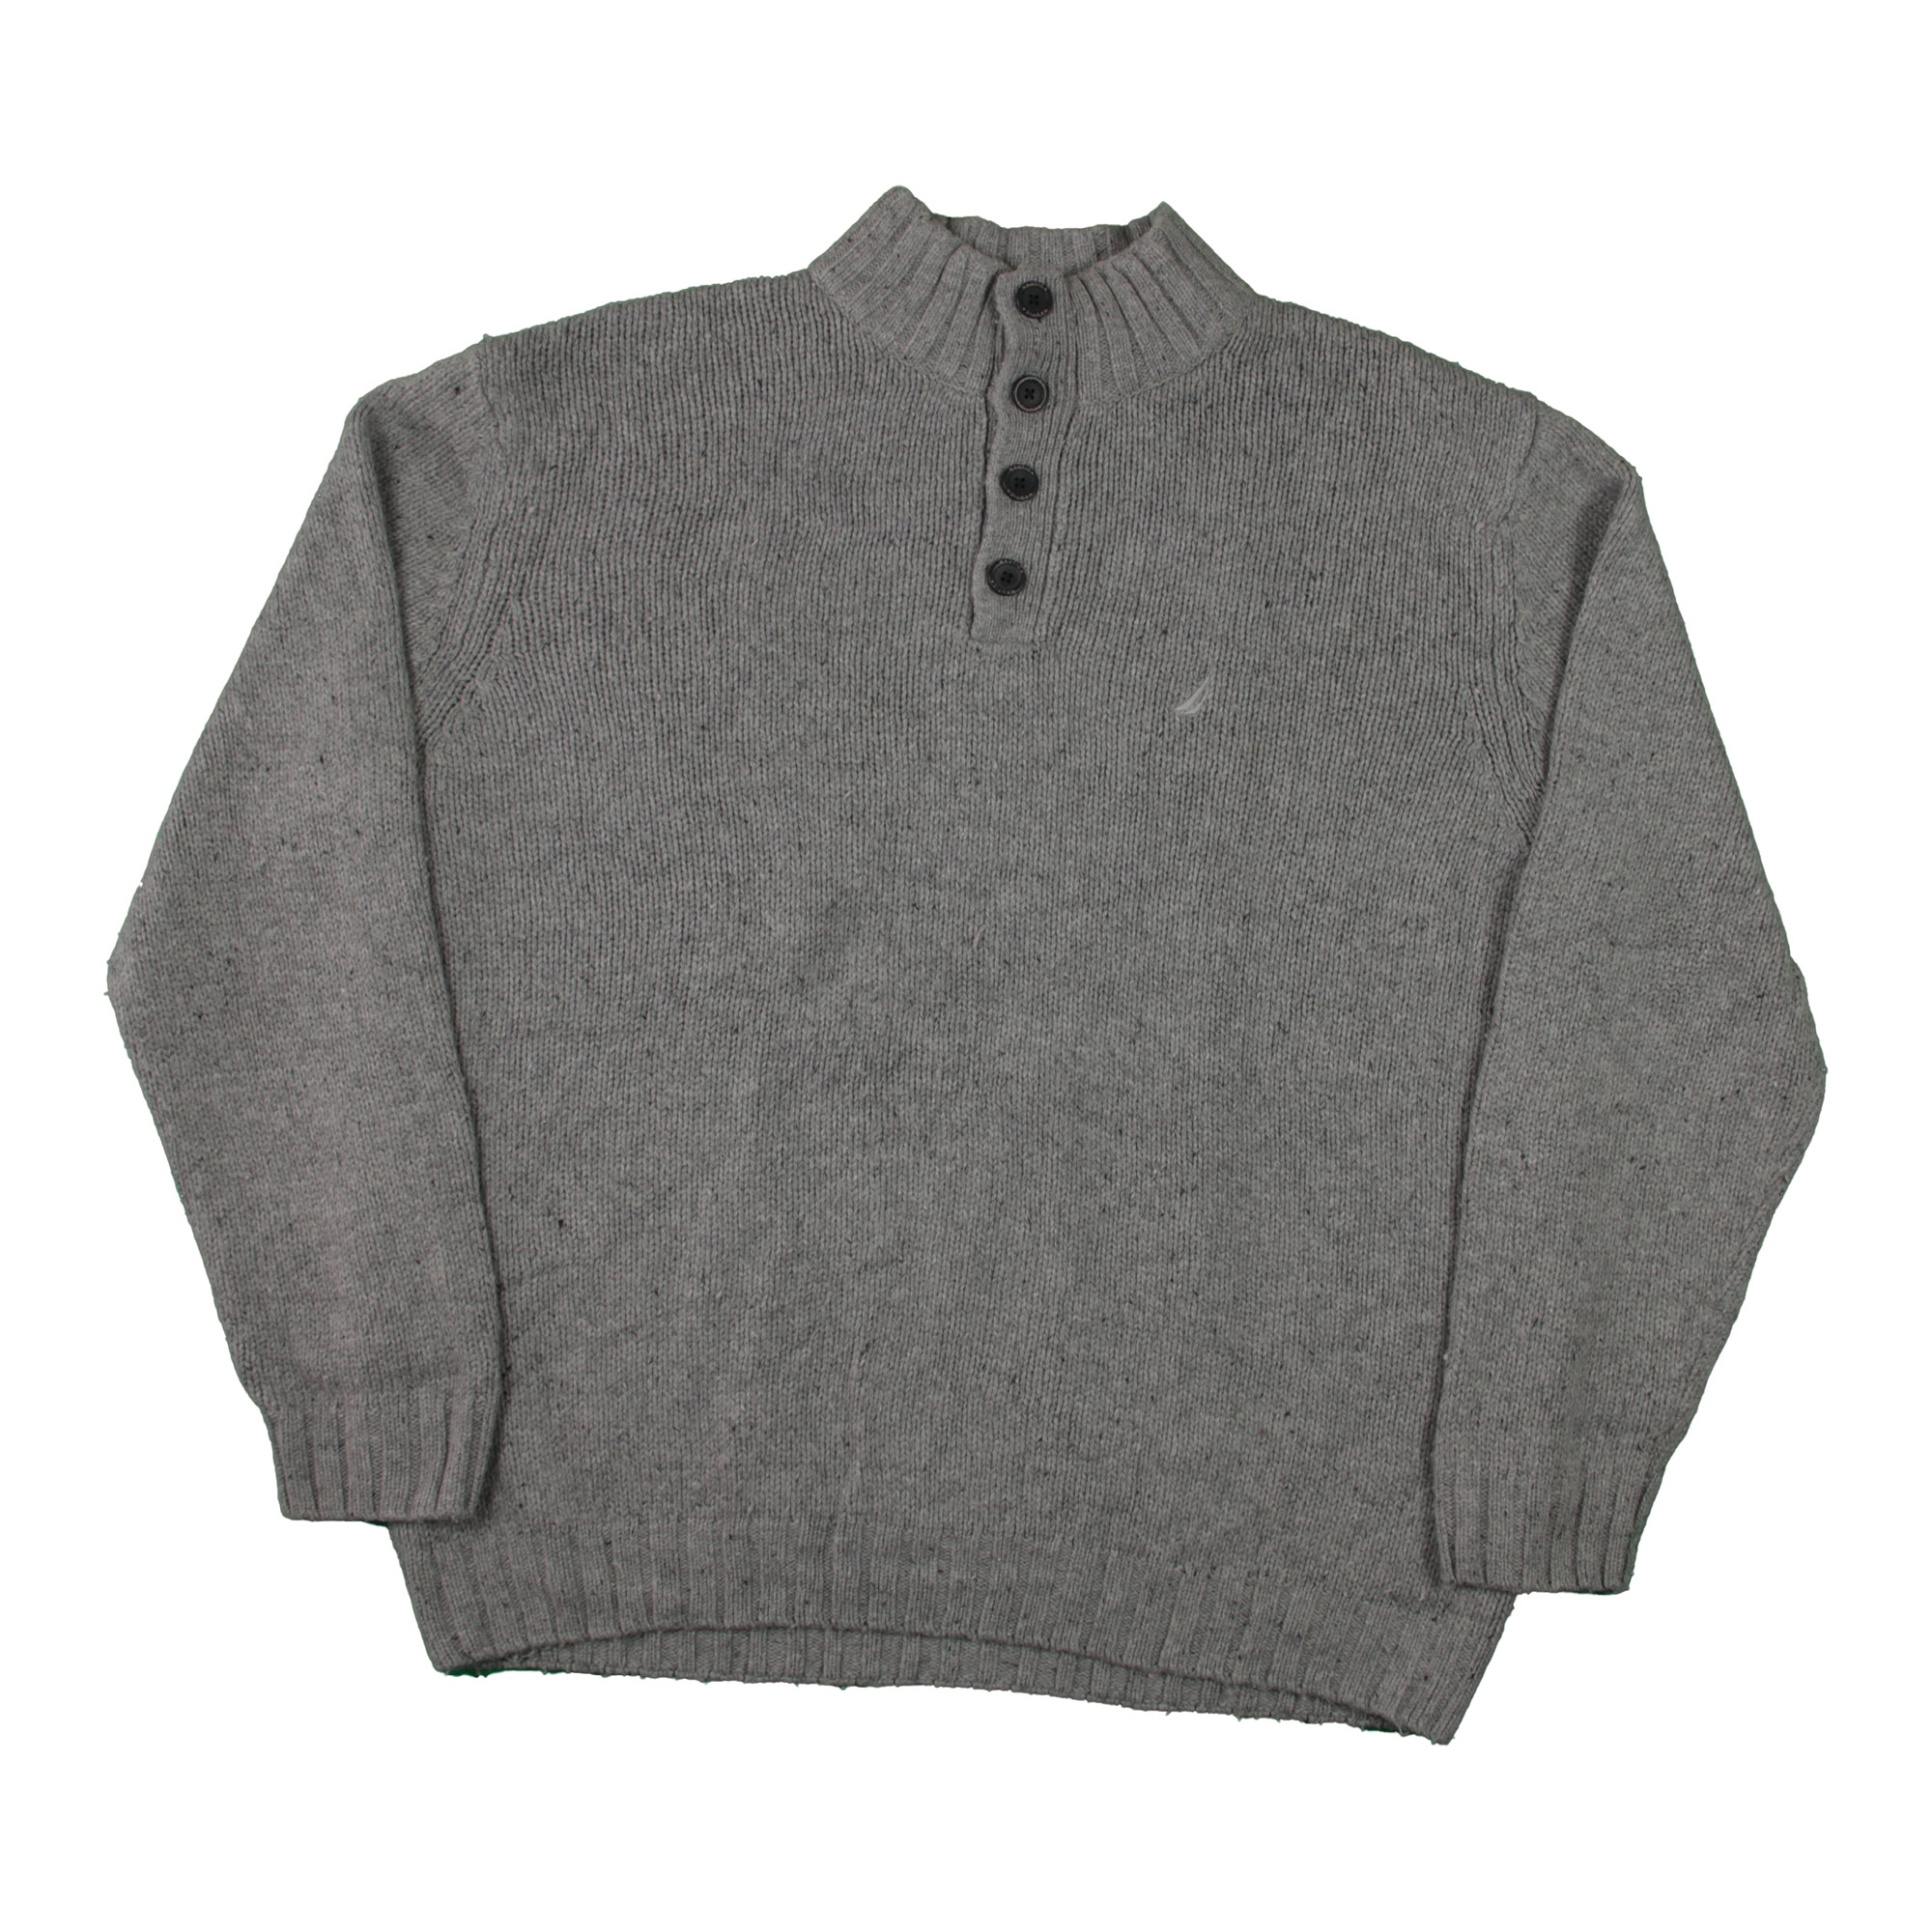 Nautica Sweatshirt - XL